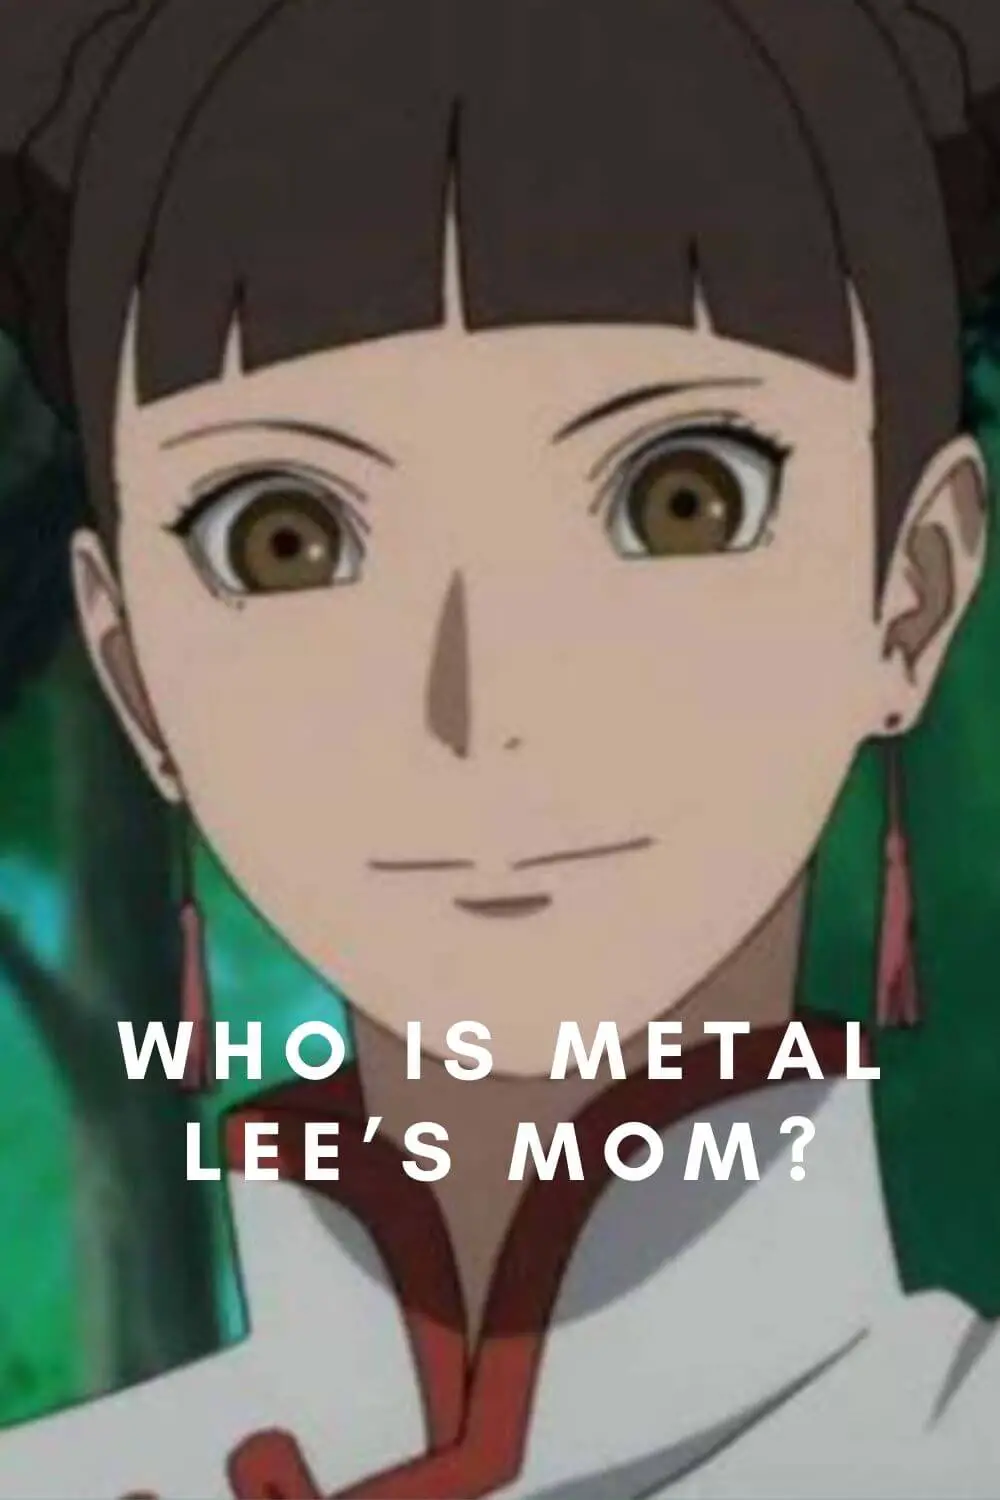 Who is Metal Lee's mom?